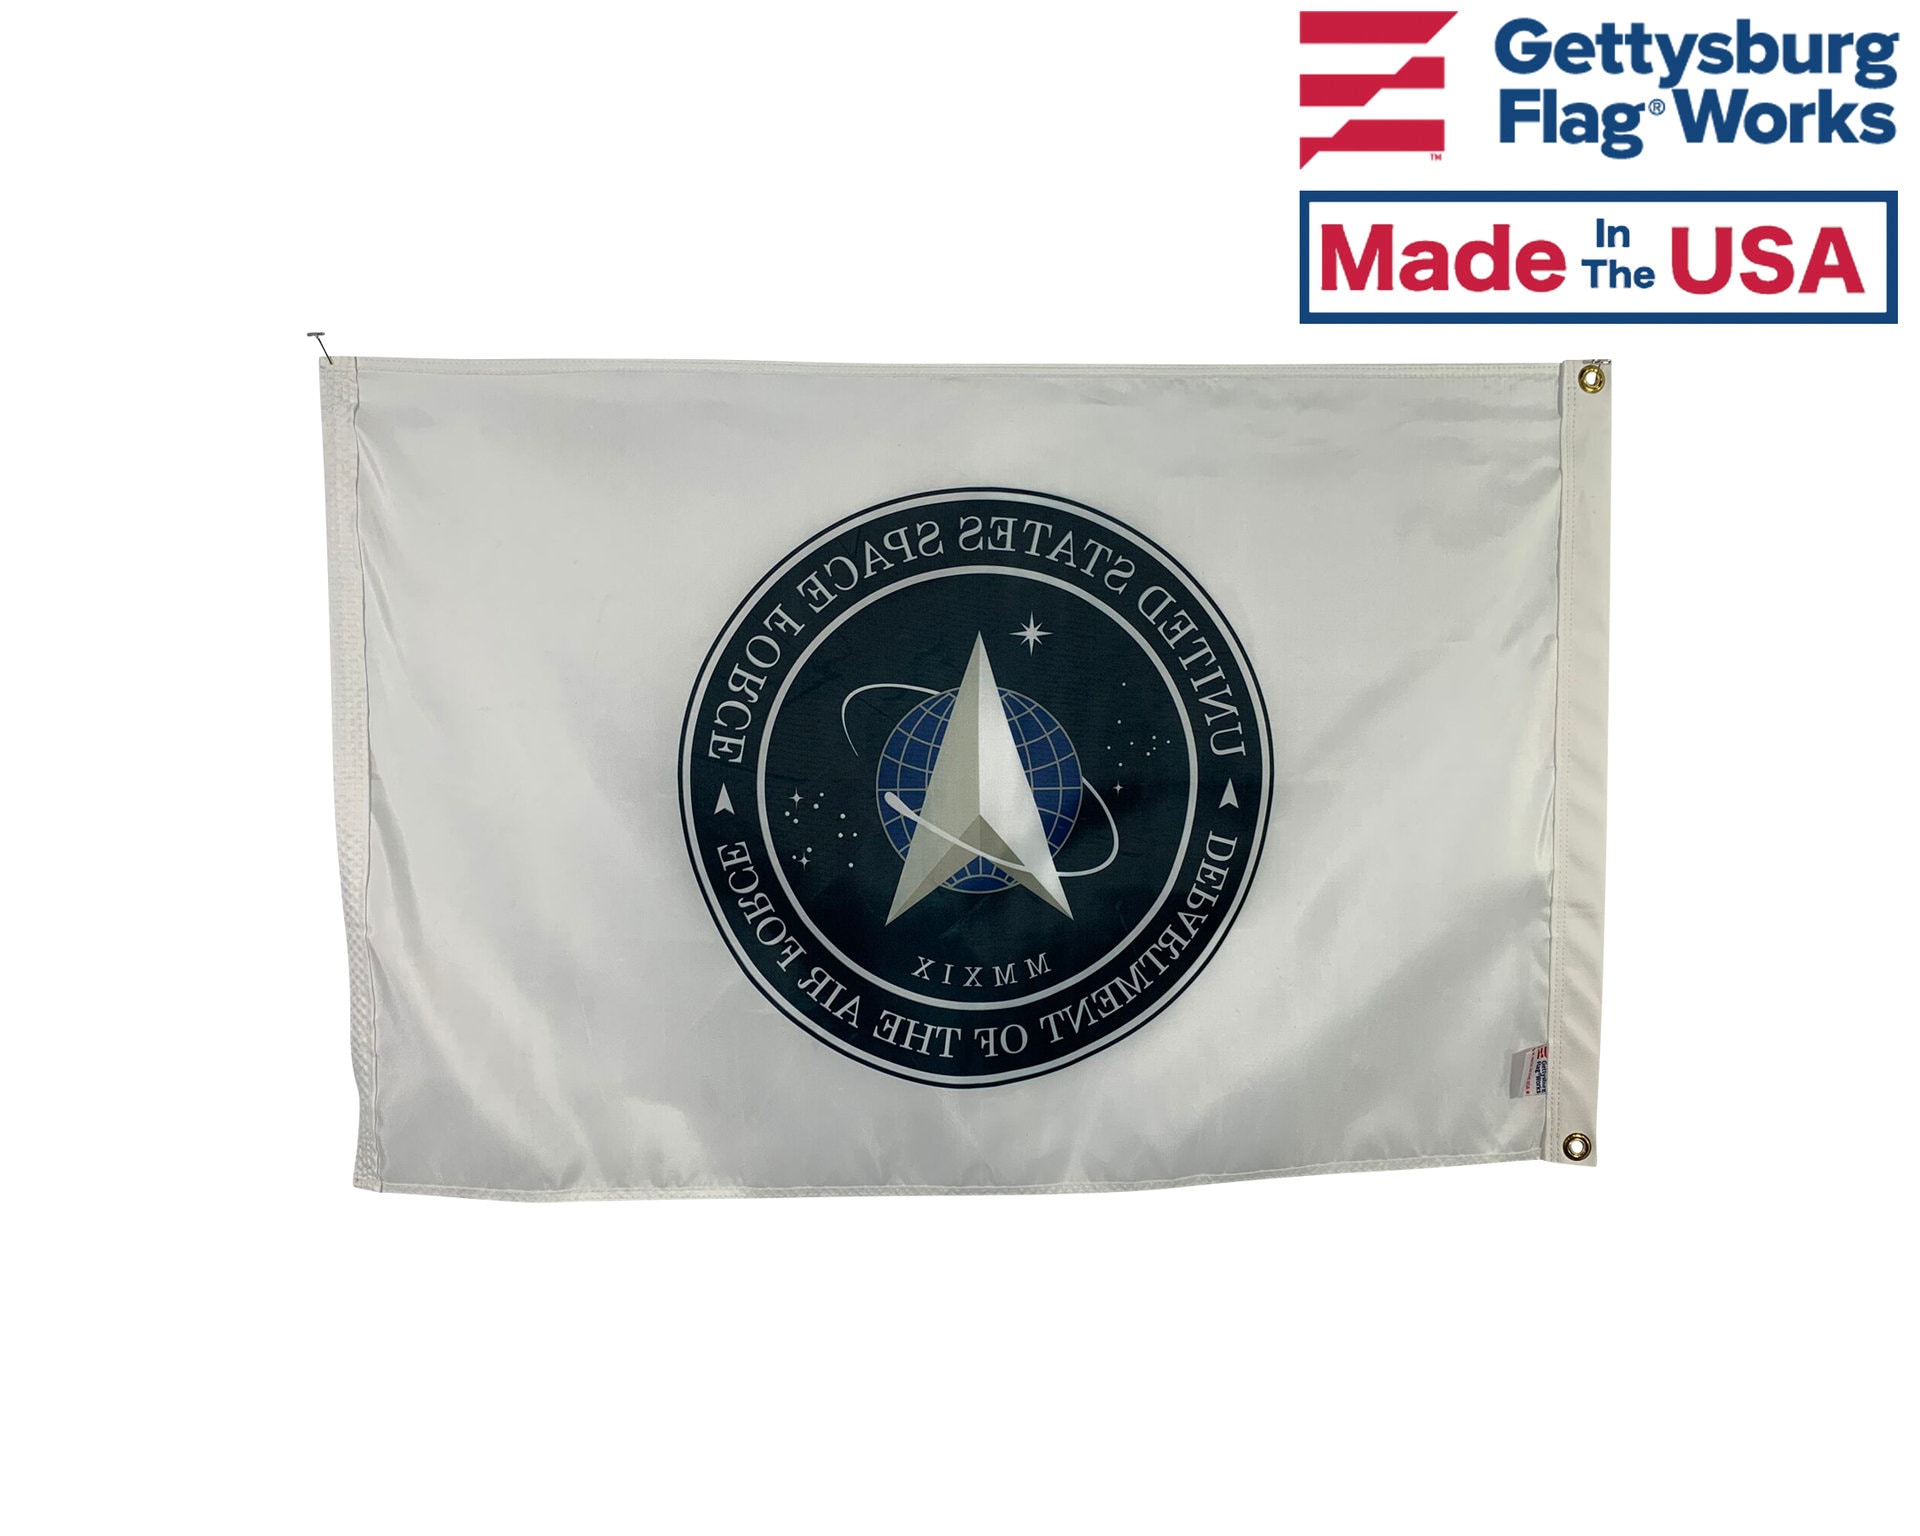 3x5 U.S Navy Ship Emblem Seal Nylon Knitted Flag 3'x5' Brass Grommets